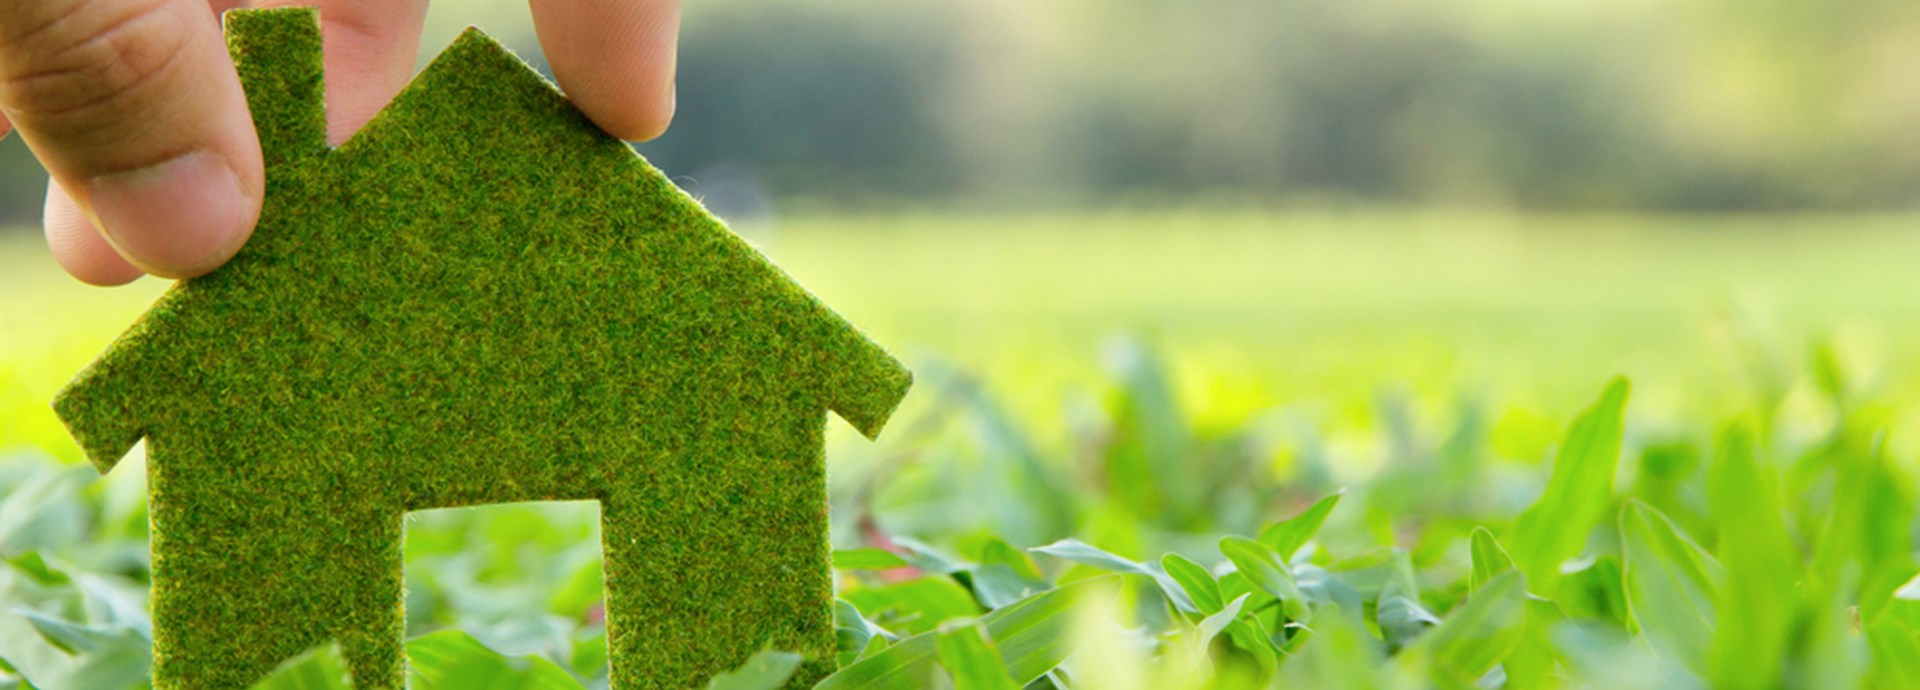 eco friendly greener home concept